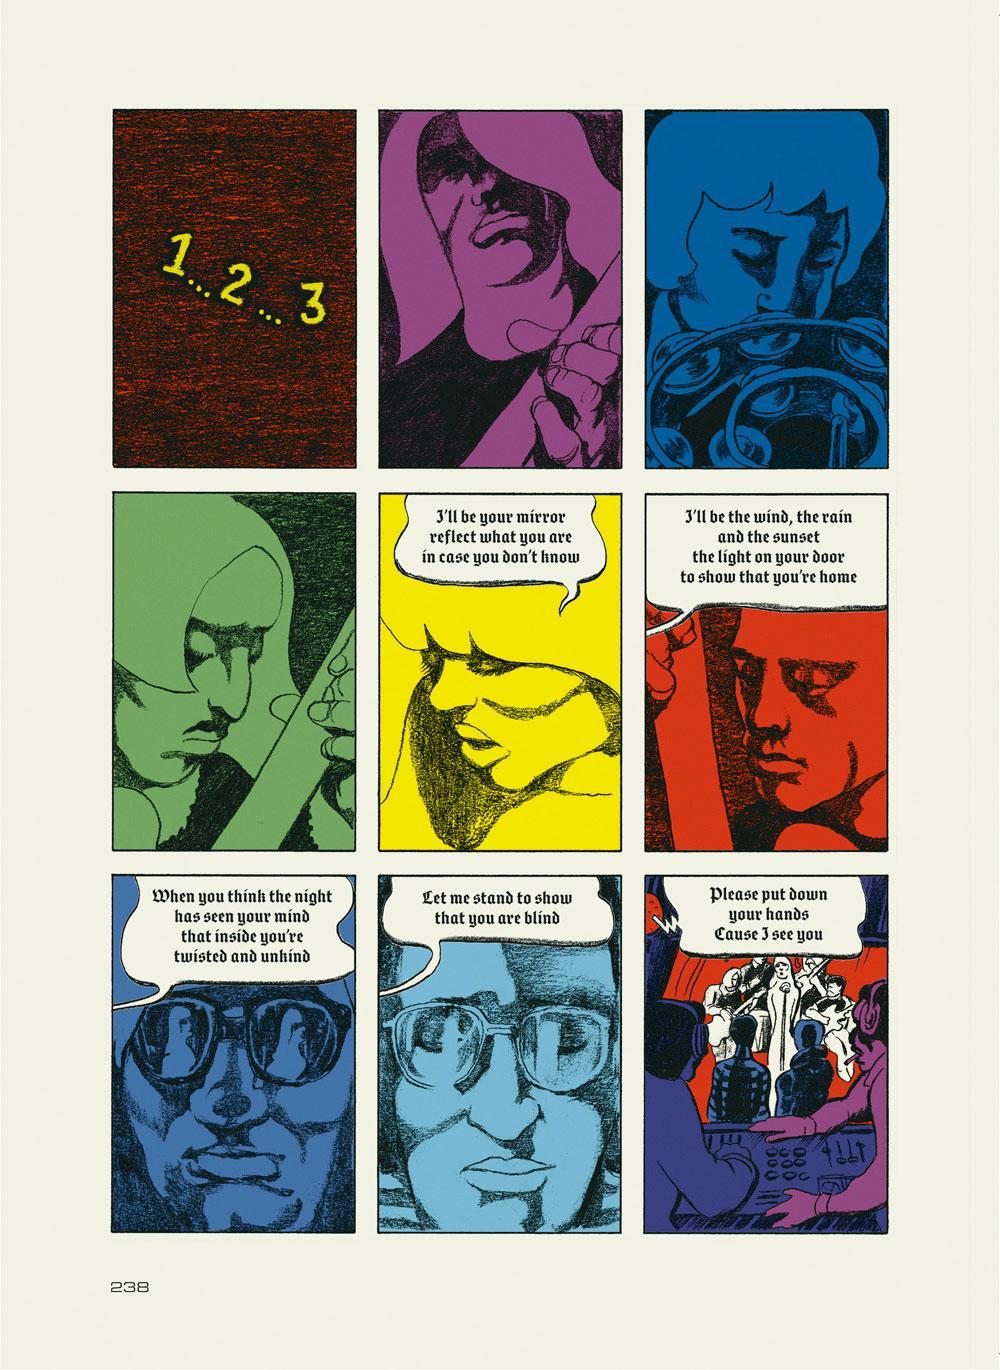 Tekenaar Typex verstript Andy Warhol: 'Je mag het mysterie niet helemaal wegnemen'